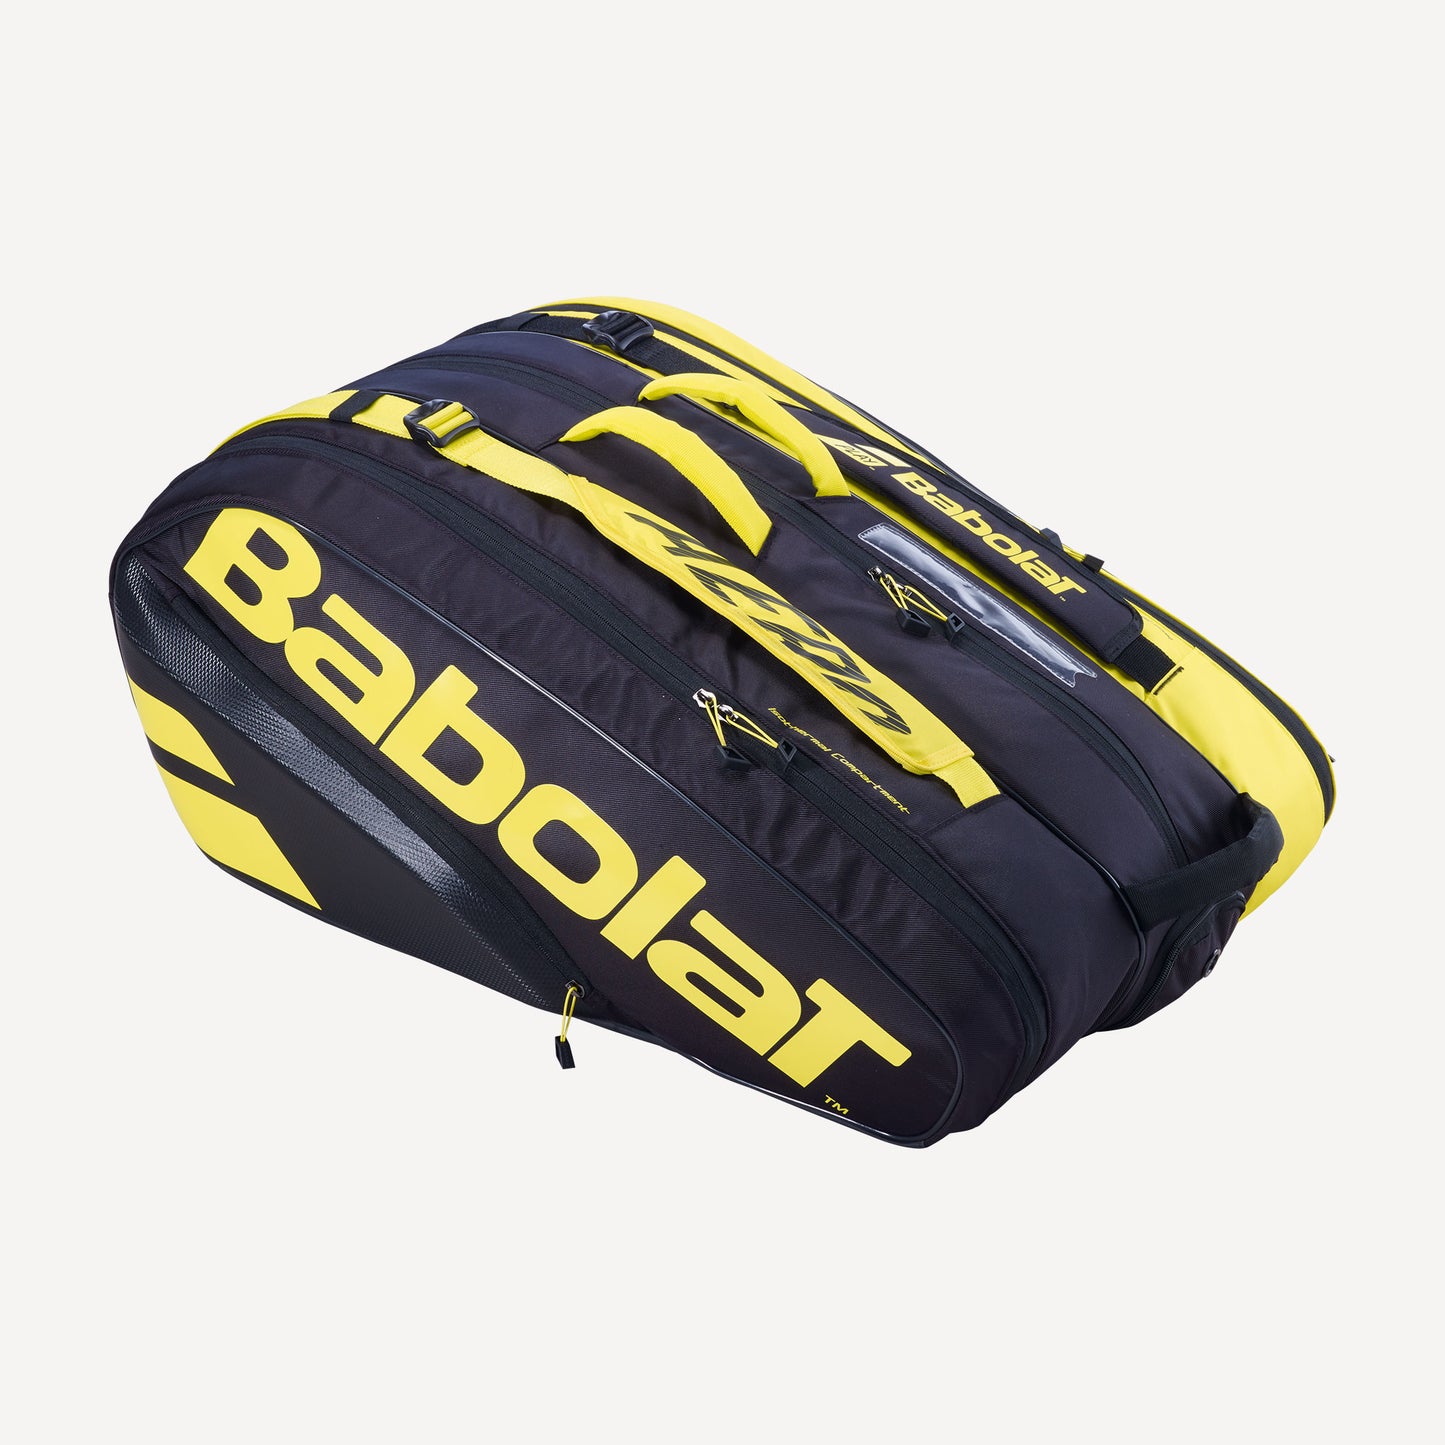 Babolat Pure Aero RH X12 Tennis Bag Black (1)